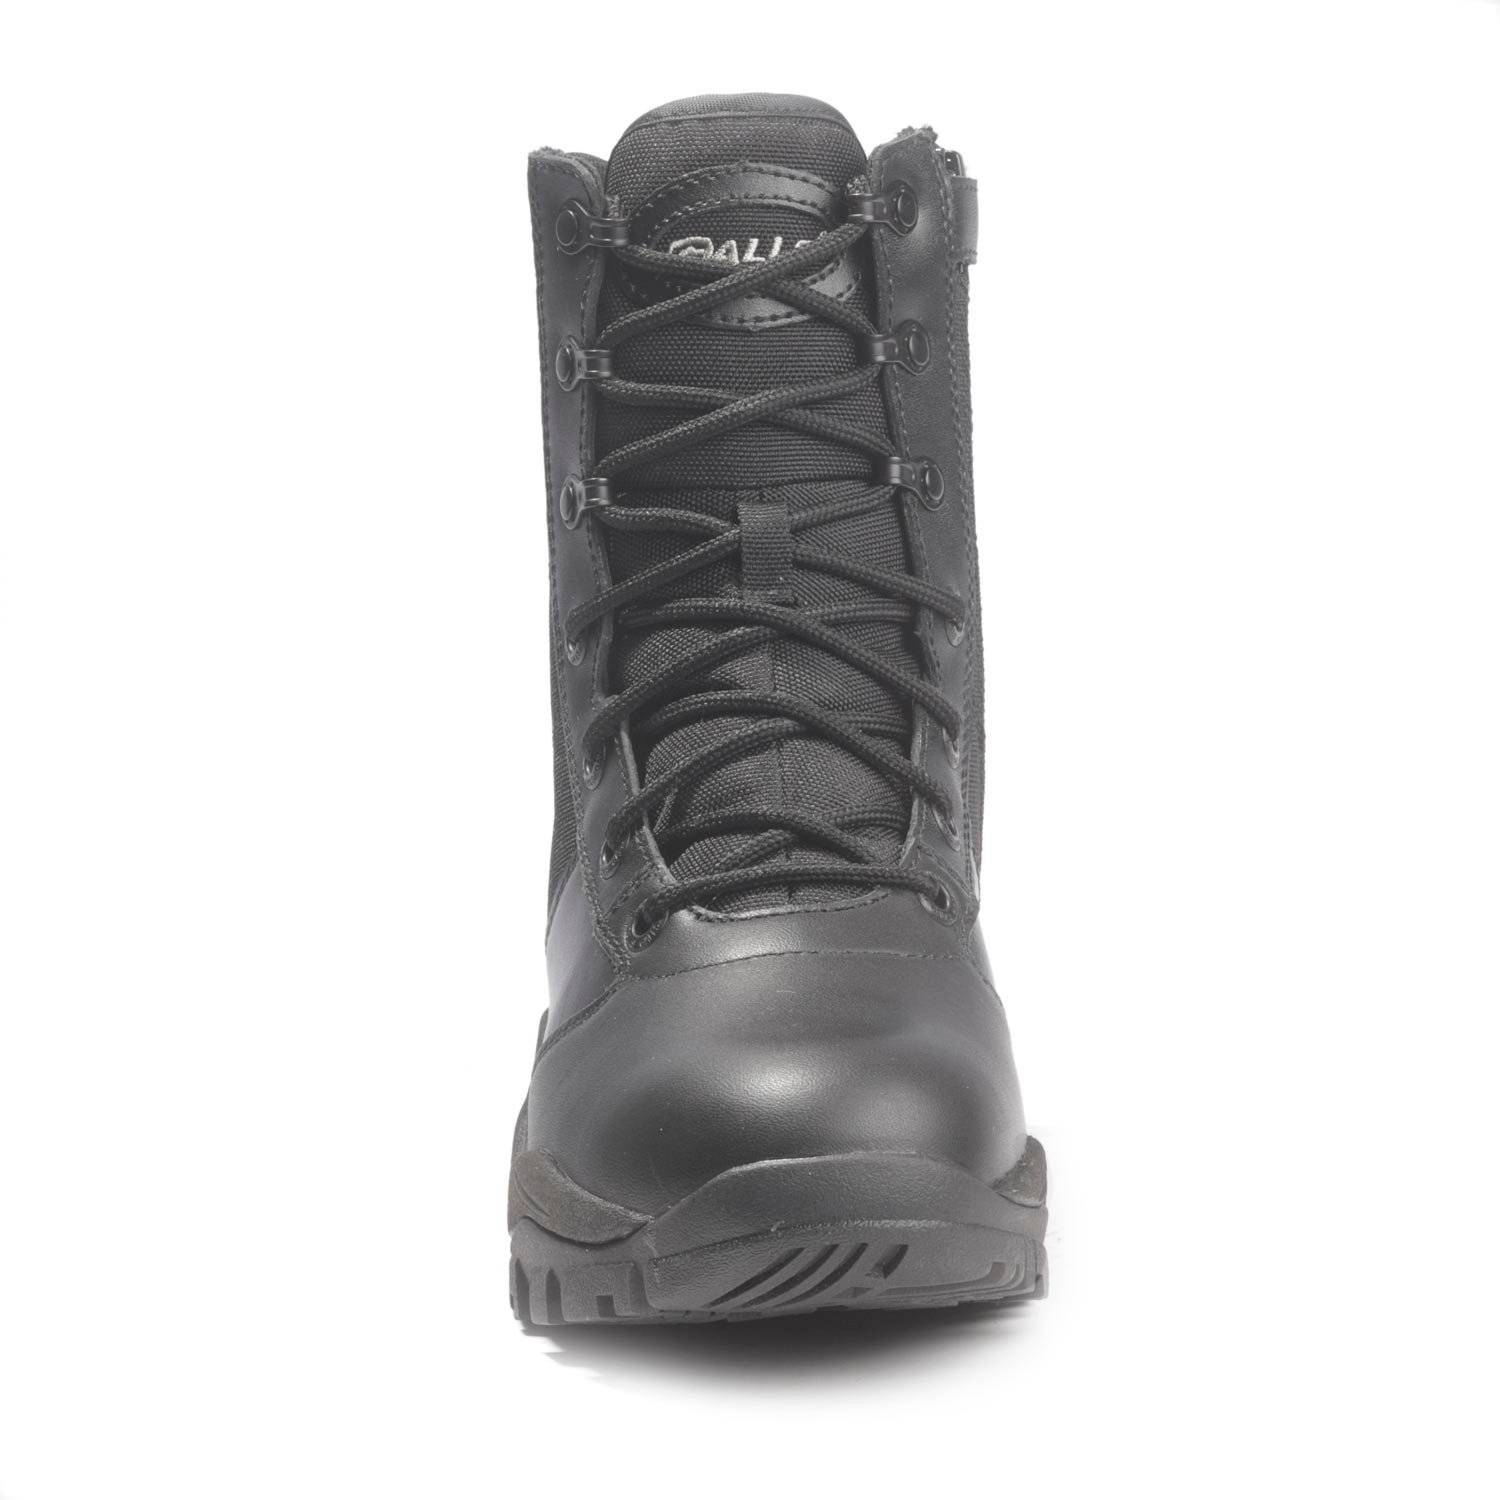 Galls Women's 8” Side Zip Boots | Duty Boots